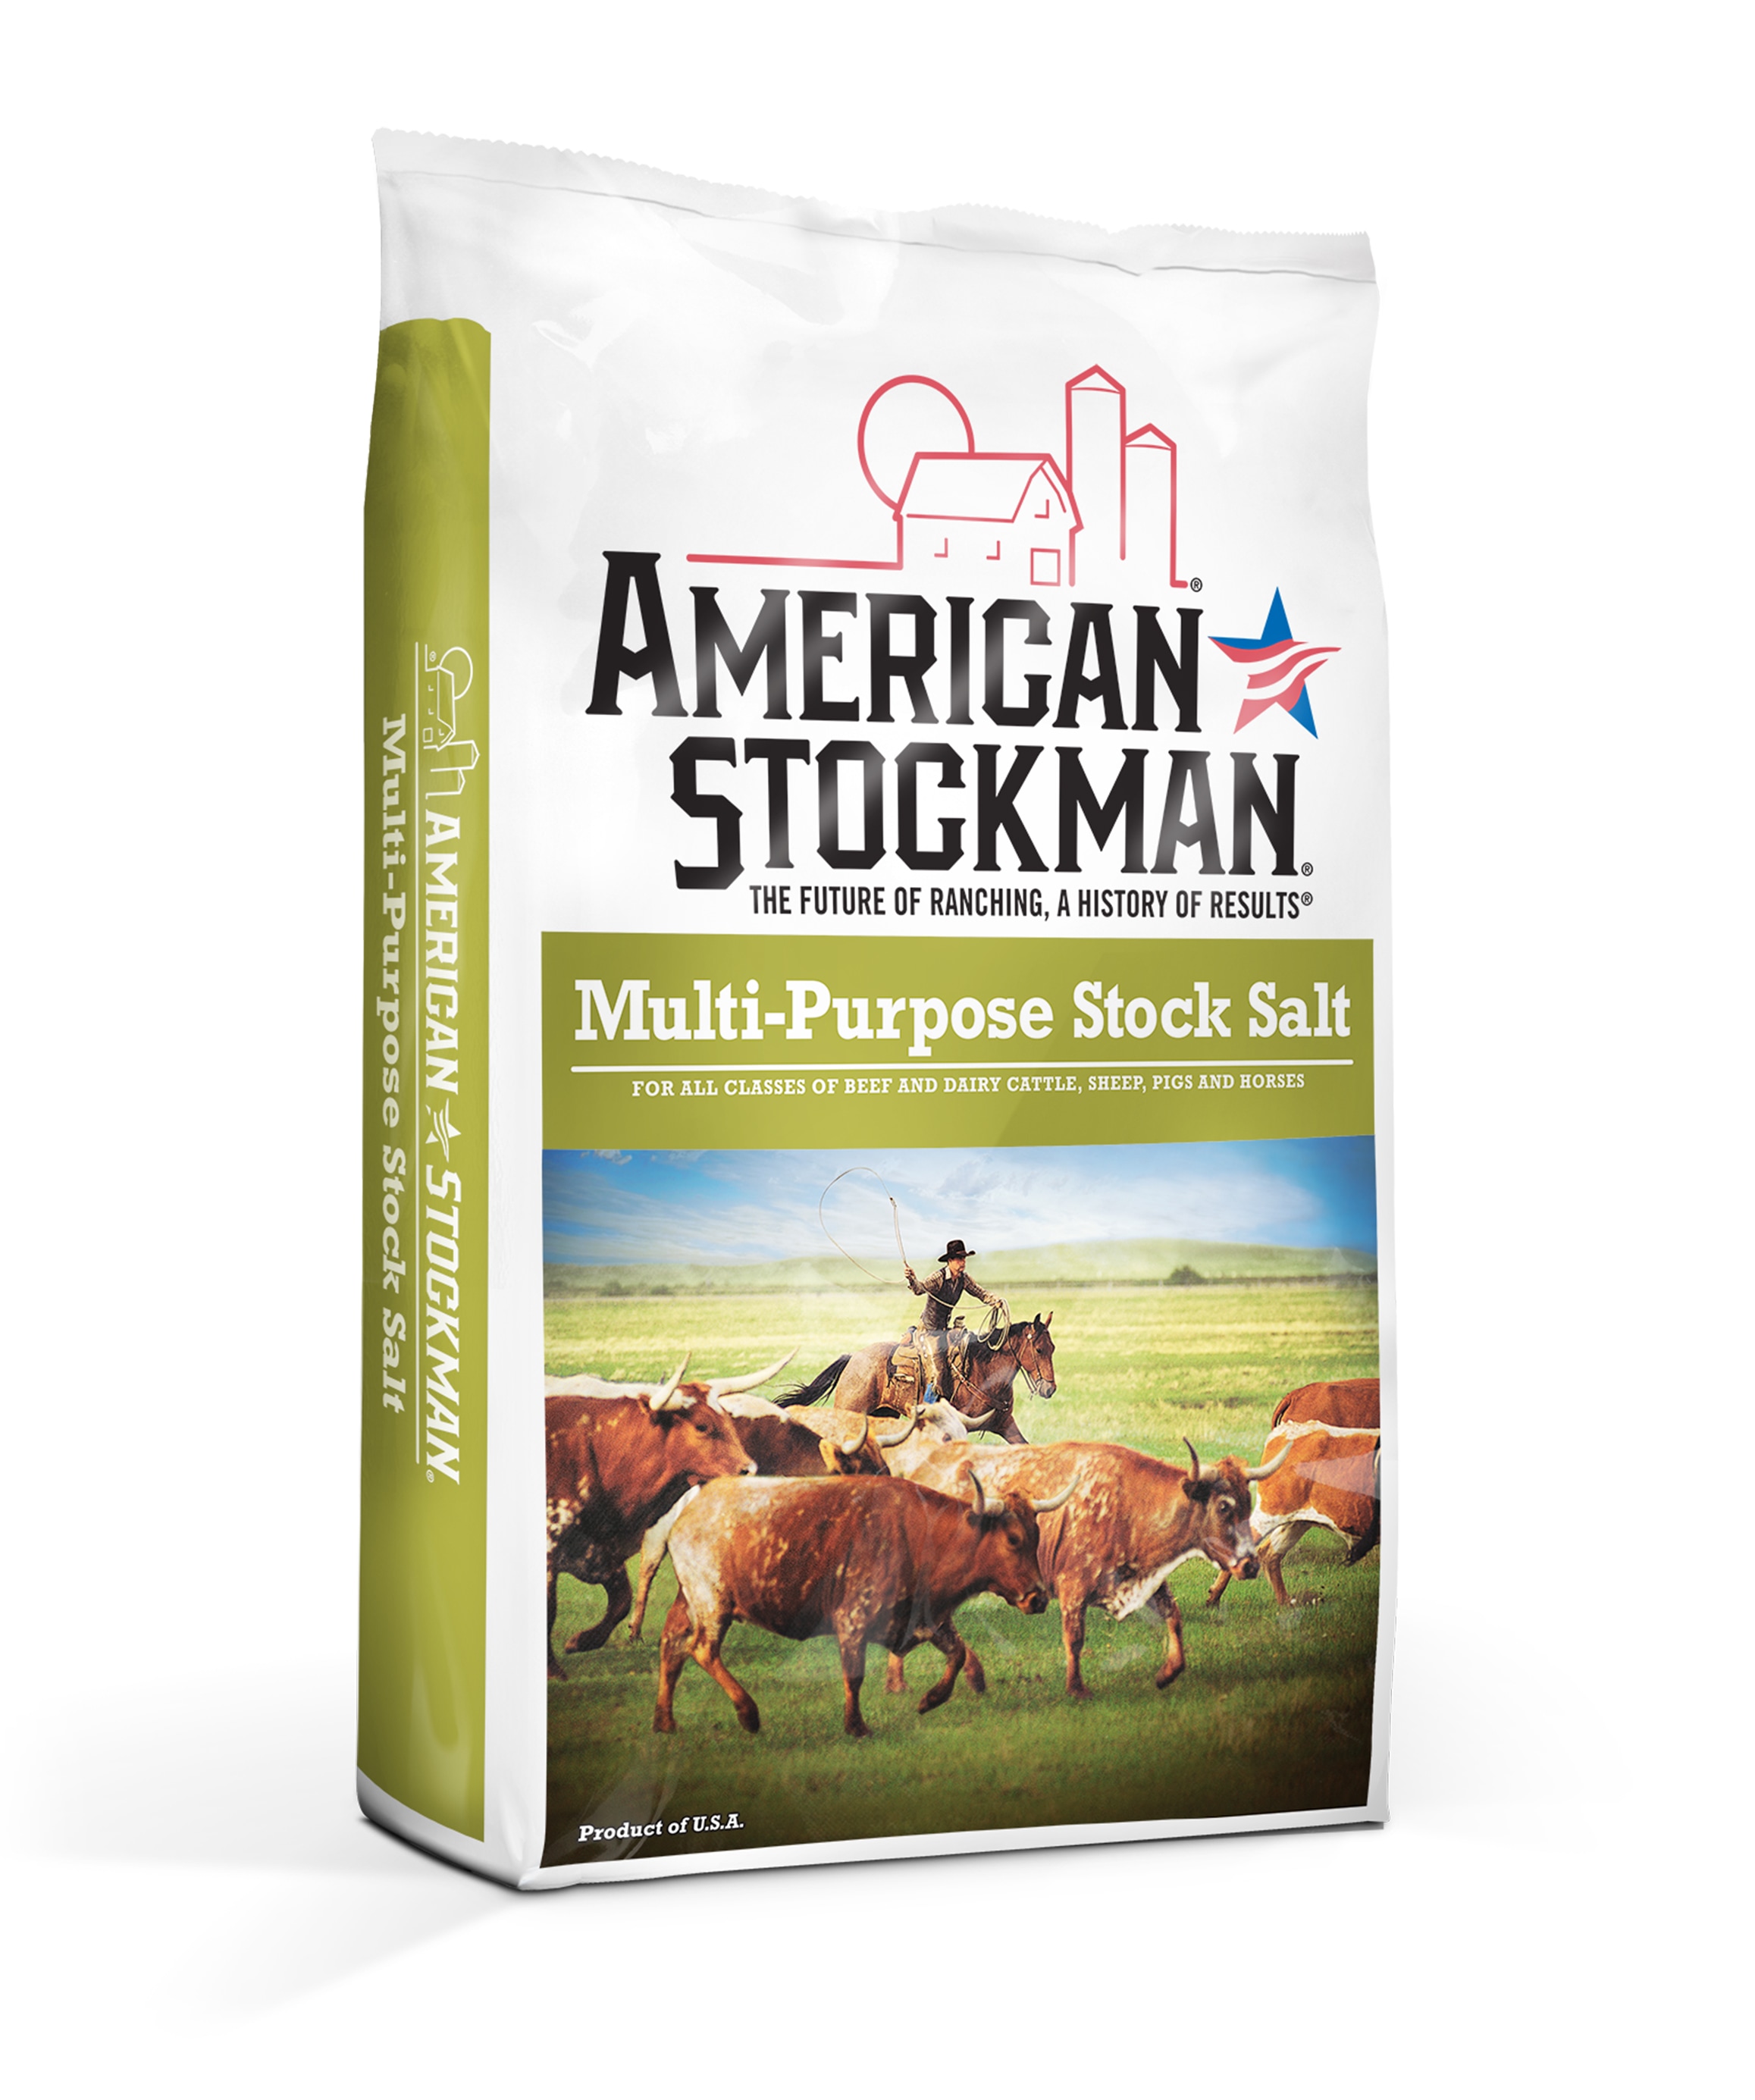  American Stockman® Multi-Purpose Stock Salt Bag